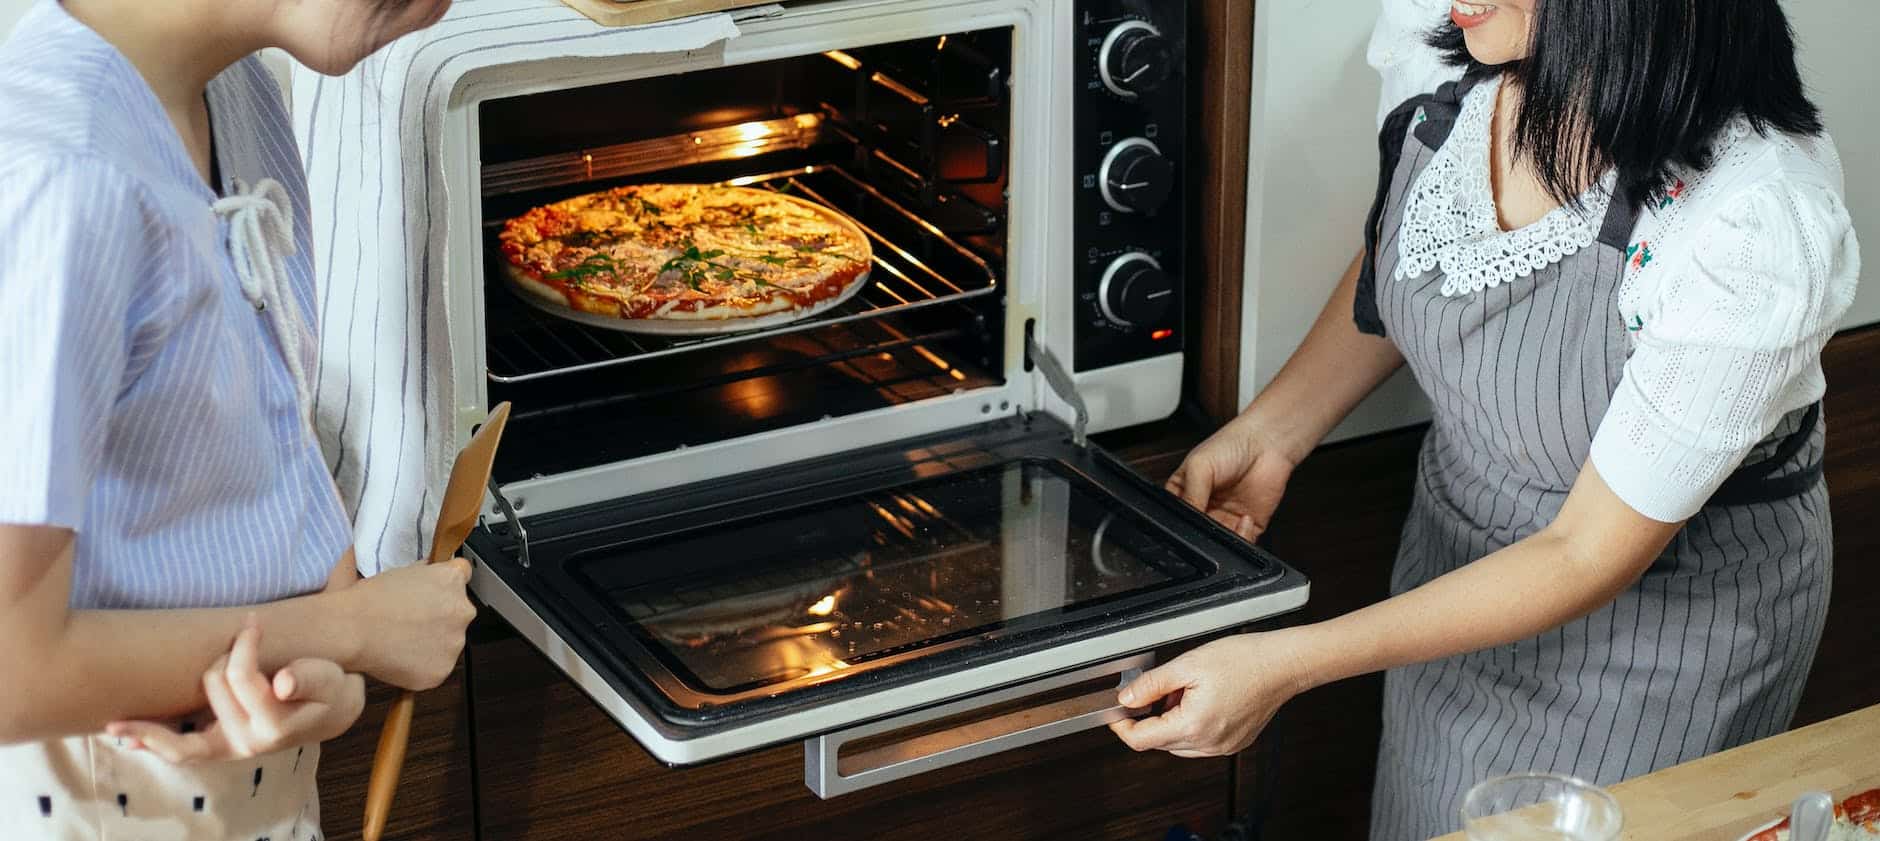 crop women putting pizza in oven